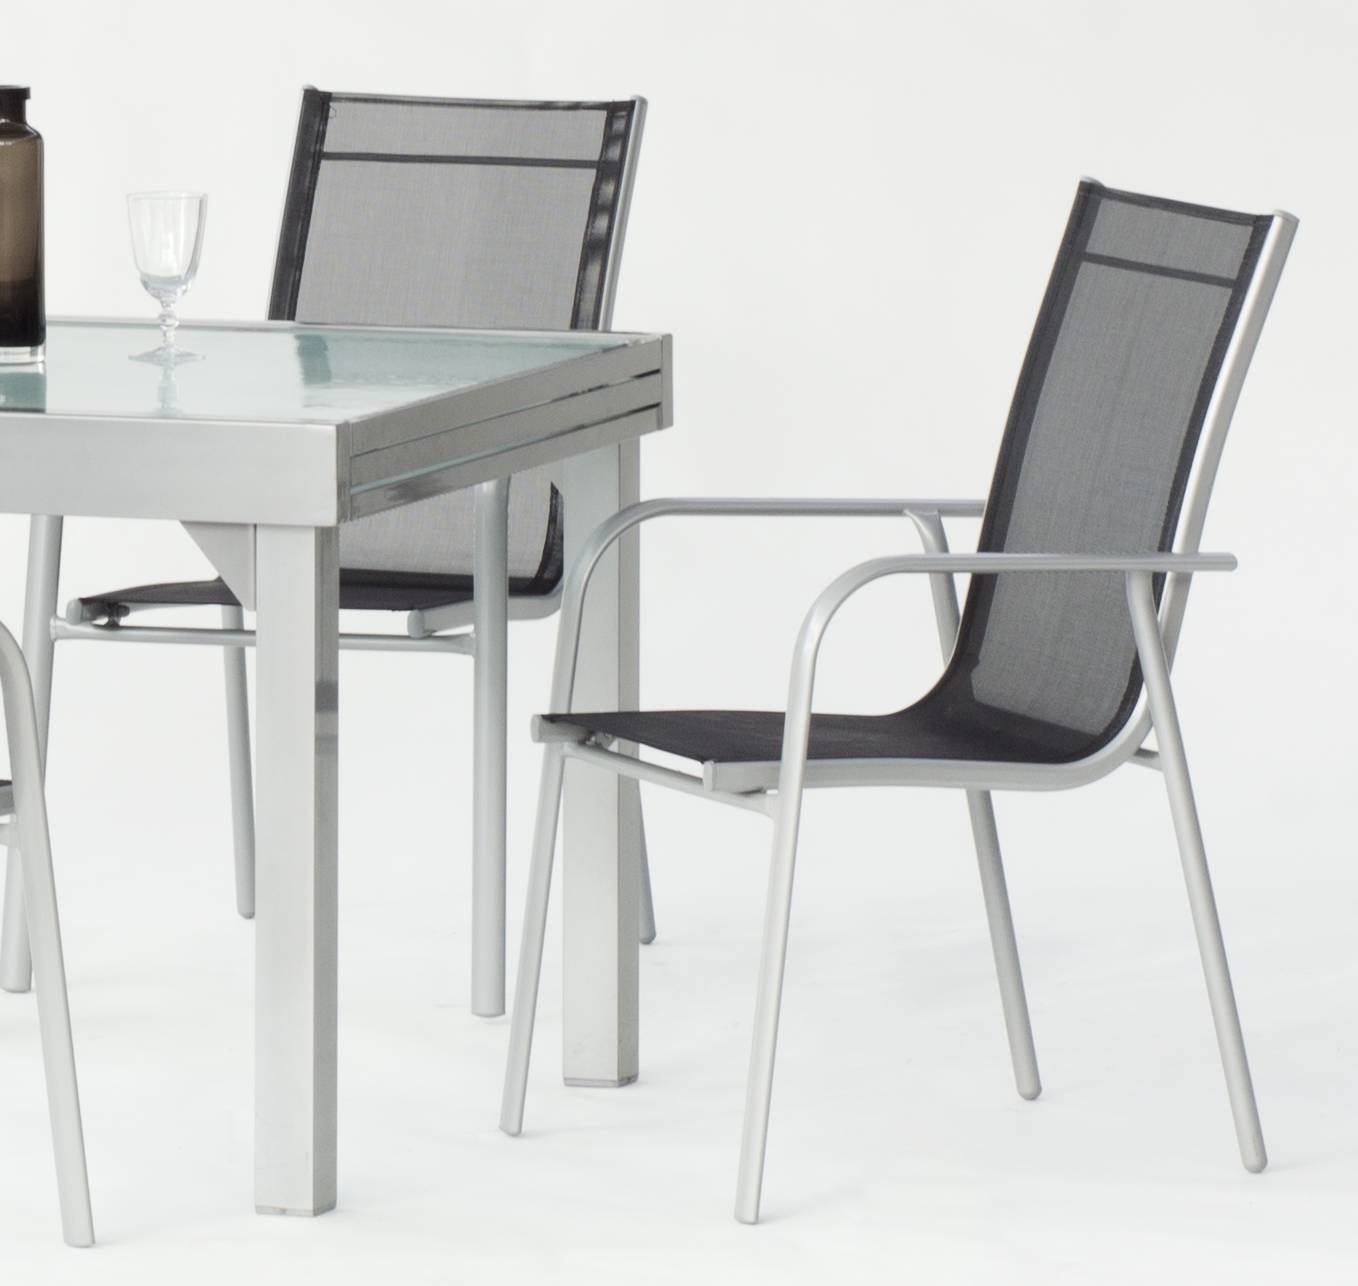 Sillón Aluminio Nora - Sillón de aluminio color plata y asiento de Textilen, para jardín y terraza